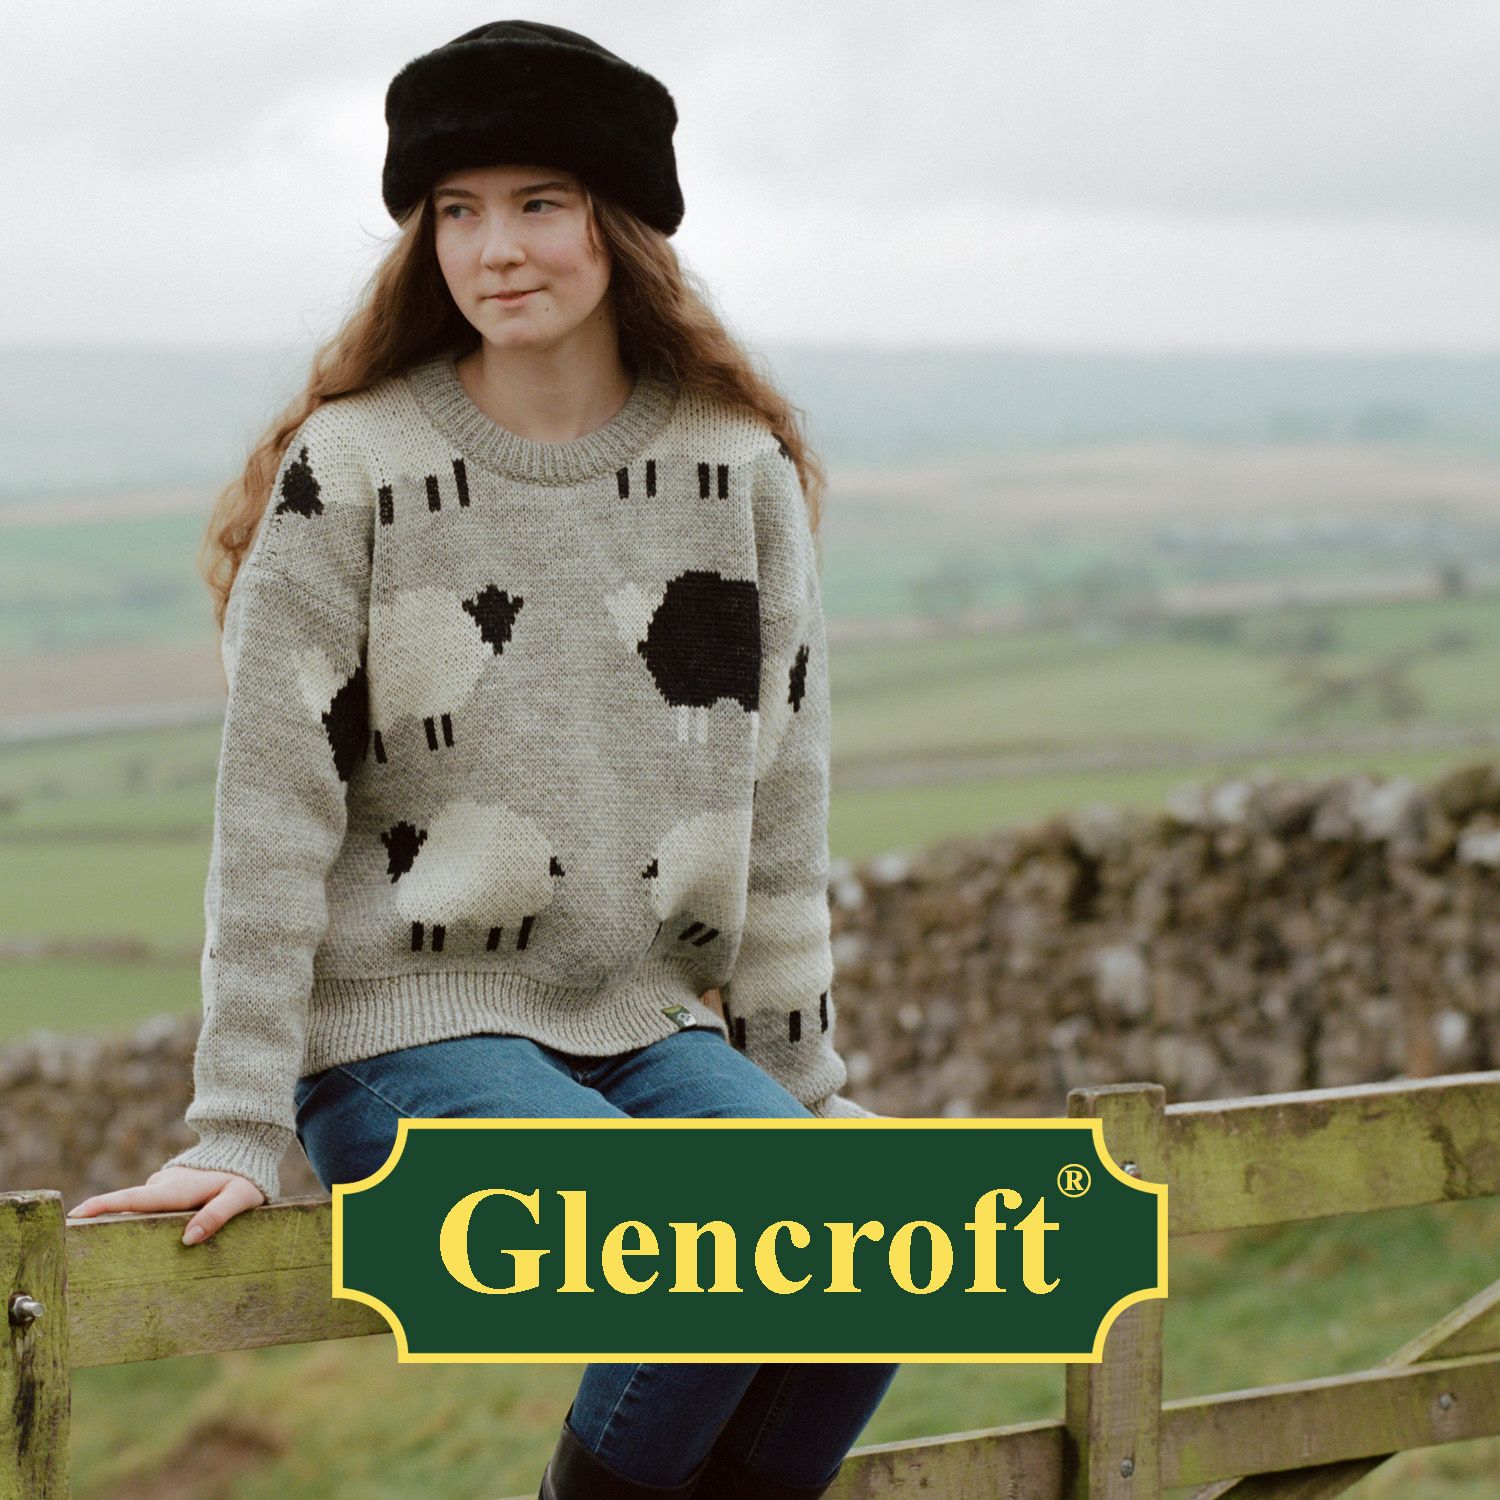 Glencroft - Richard Sexton & Co